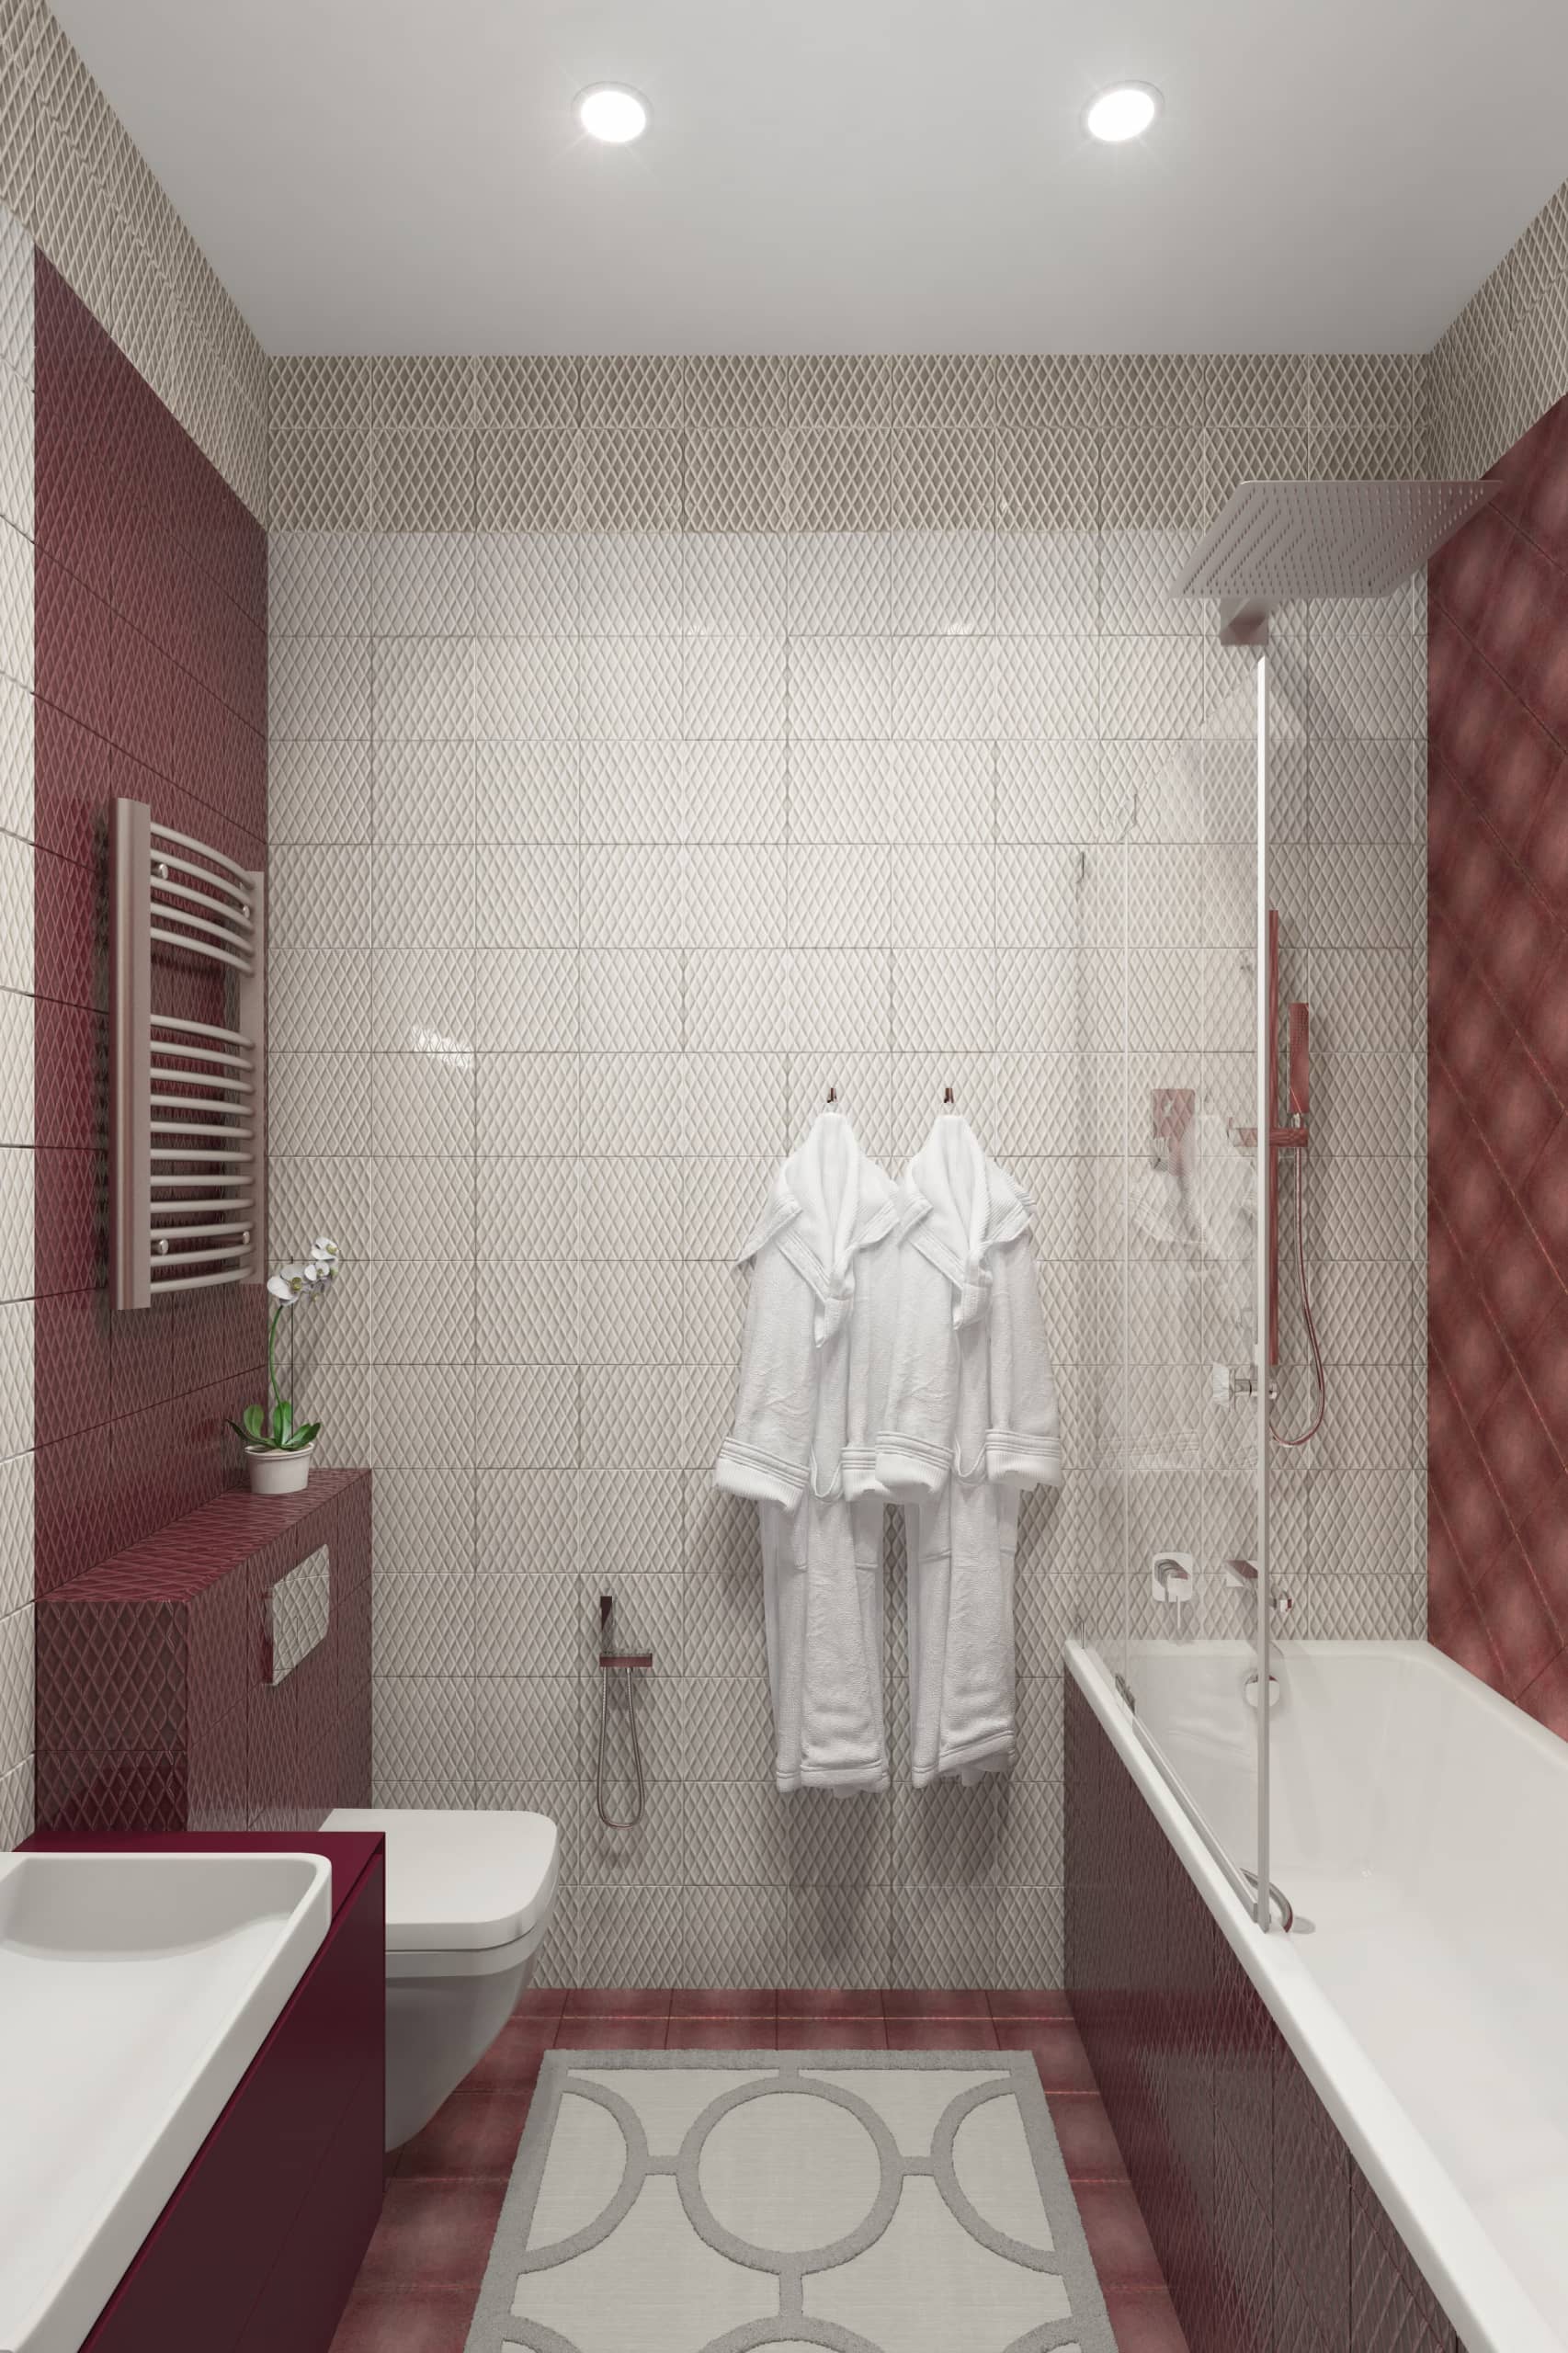 Плитка в ванной комнате имеет геометрический рисунок